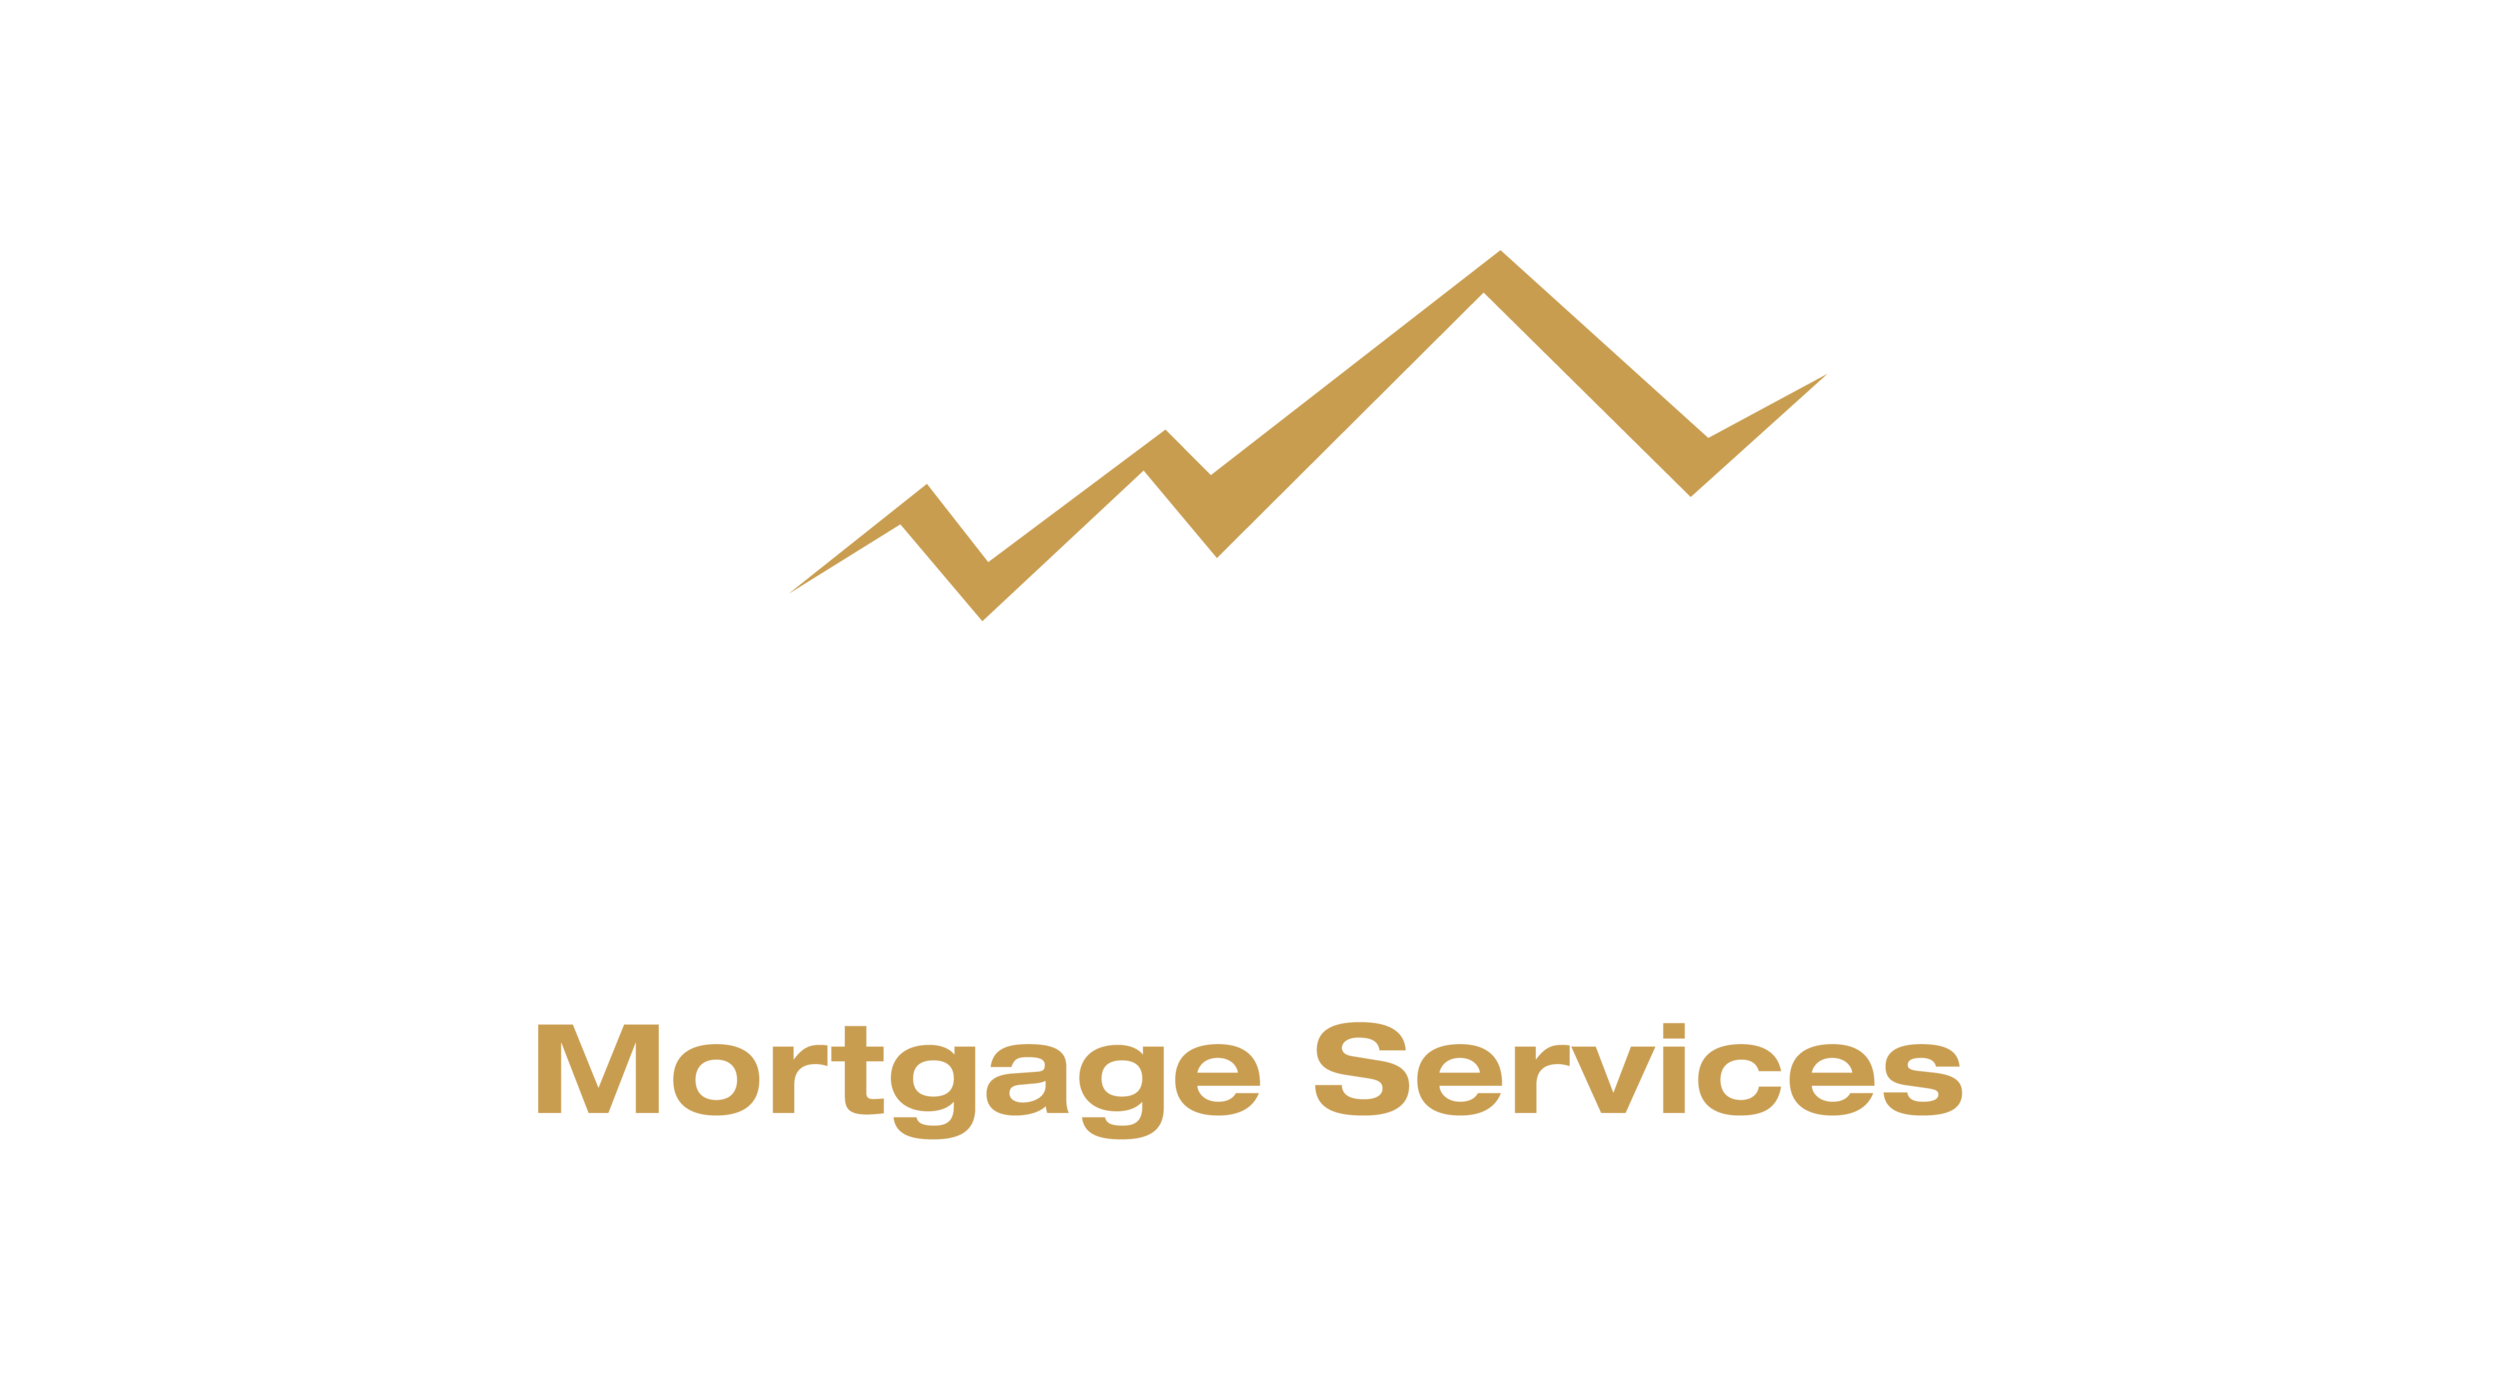 Cedar Peaks Mortgage Services